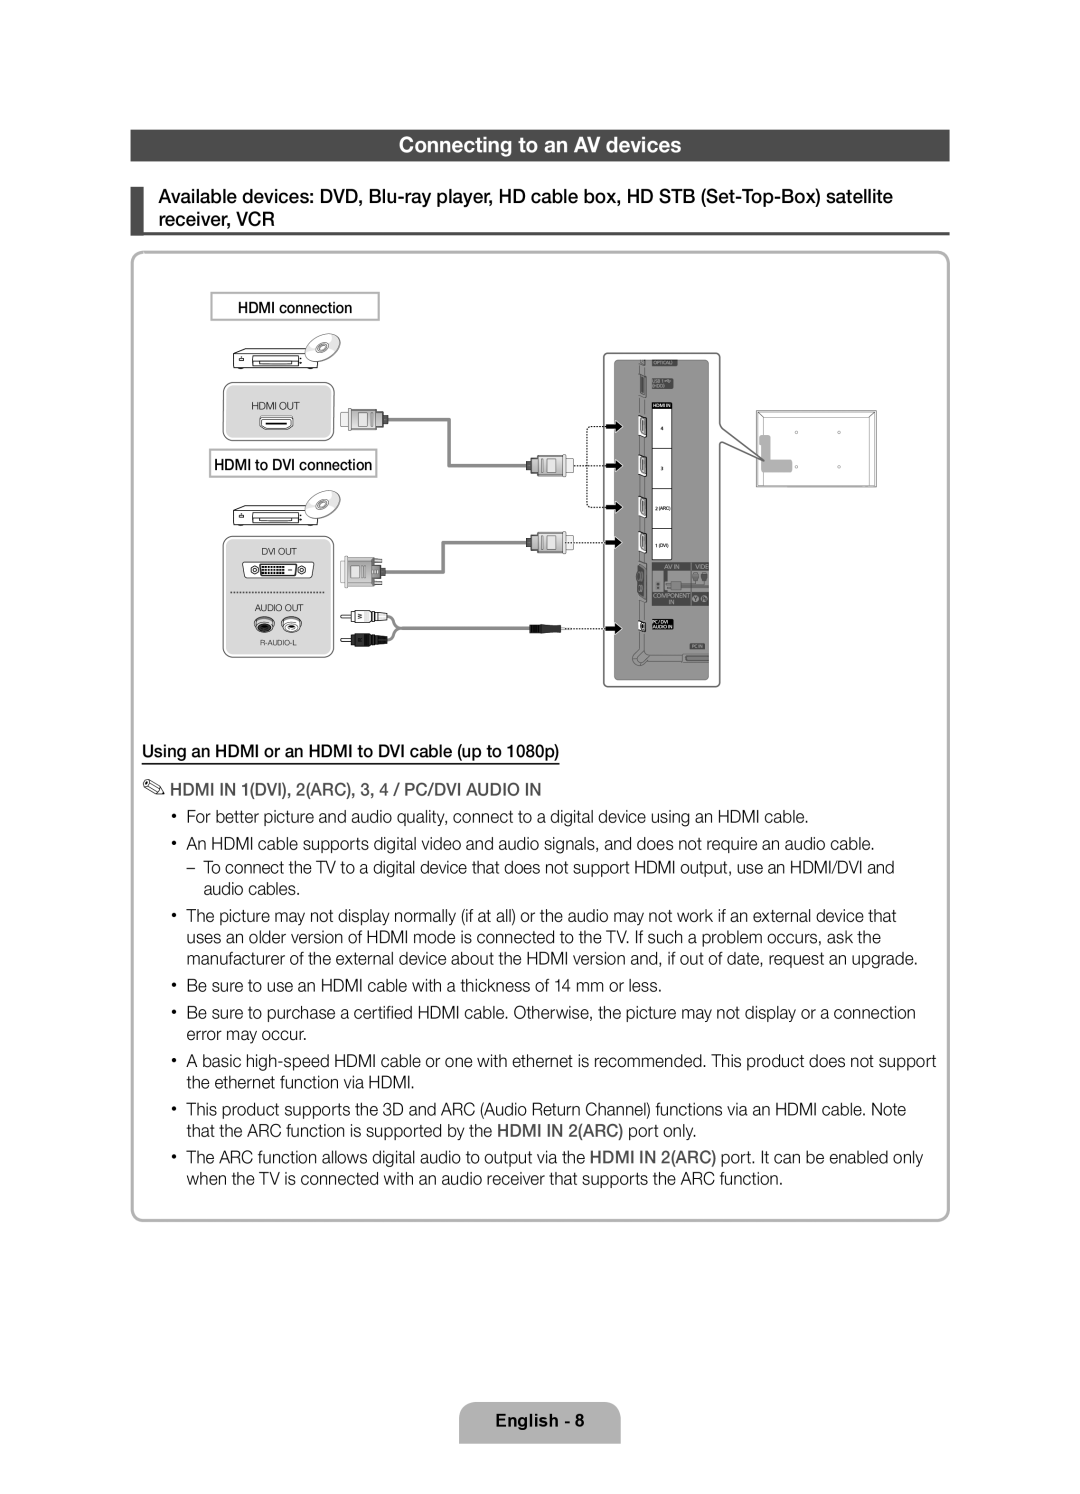 Samsung UE55D6000TPXZT, UE46D6000TPXZT Connecting to an AV devices, HDMI IN 1DVI, 2ARC, 3, 4 / PC/DVI AUDIO IN, English 